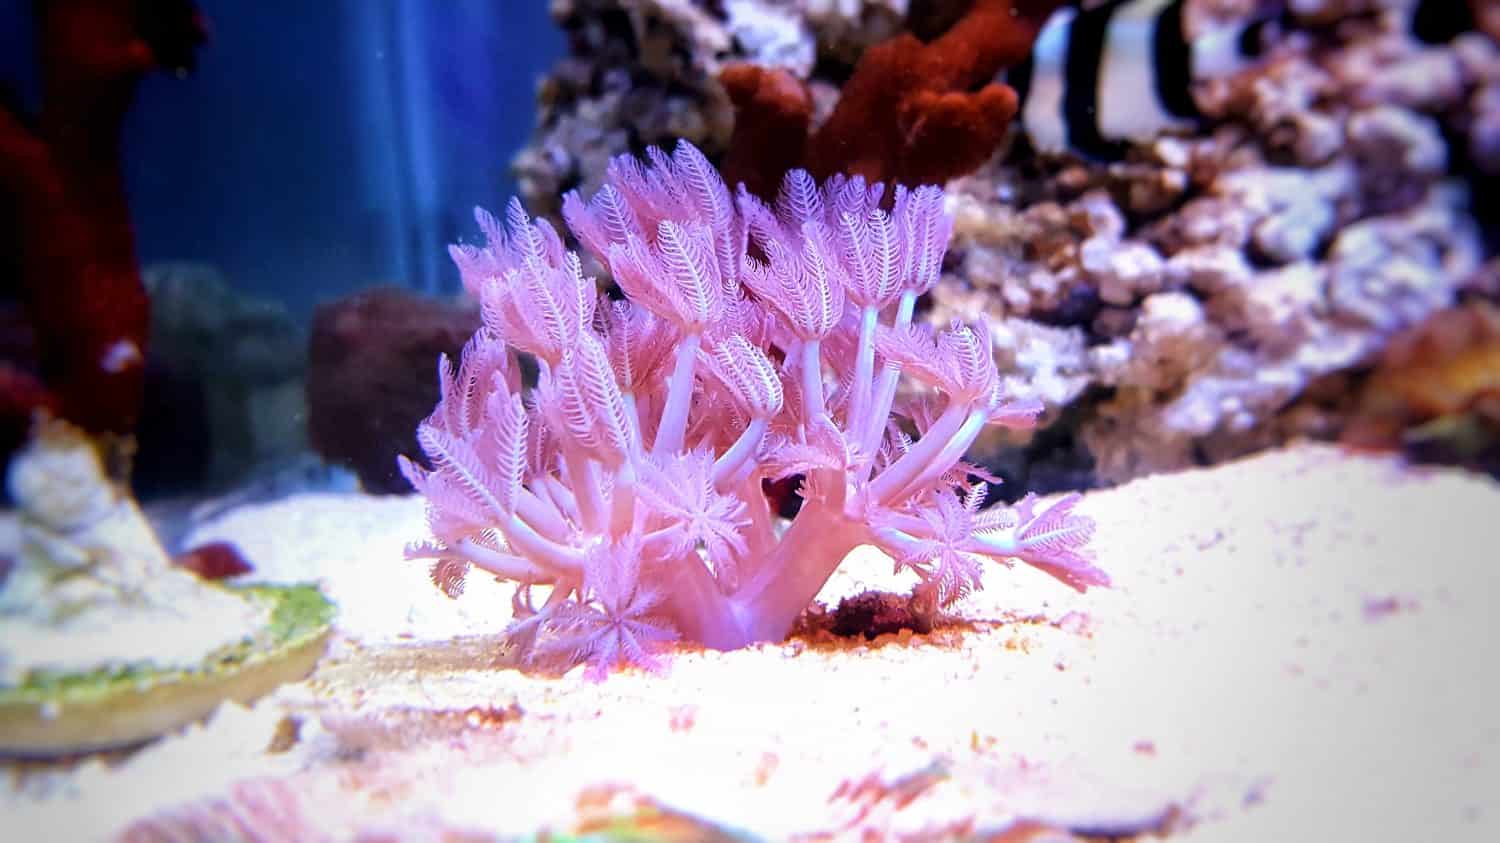 Pulsing Xenia coral in reef aquarium tank